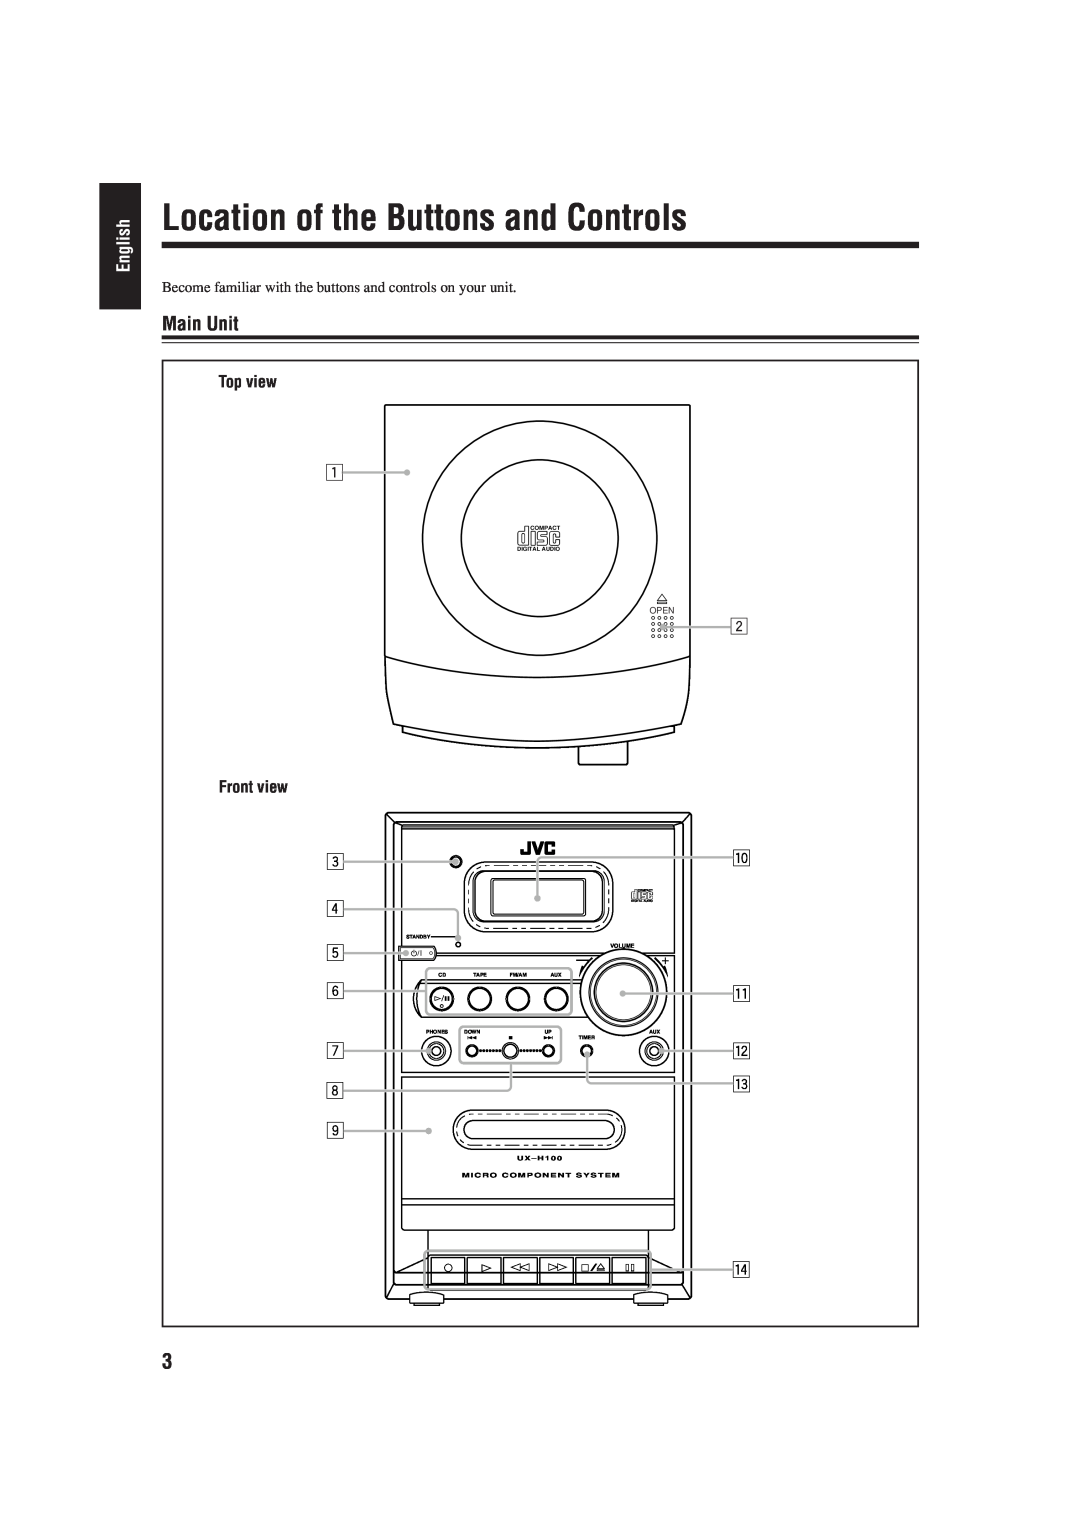 JVC UX-H100 manual English, 8e 9, Front view, Main Unit, Open, Standby, Volume, Tape, Fm/Am, Phones, Timer, U X – H 1 0 